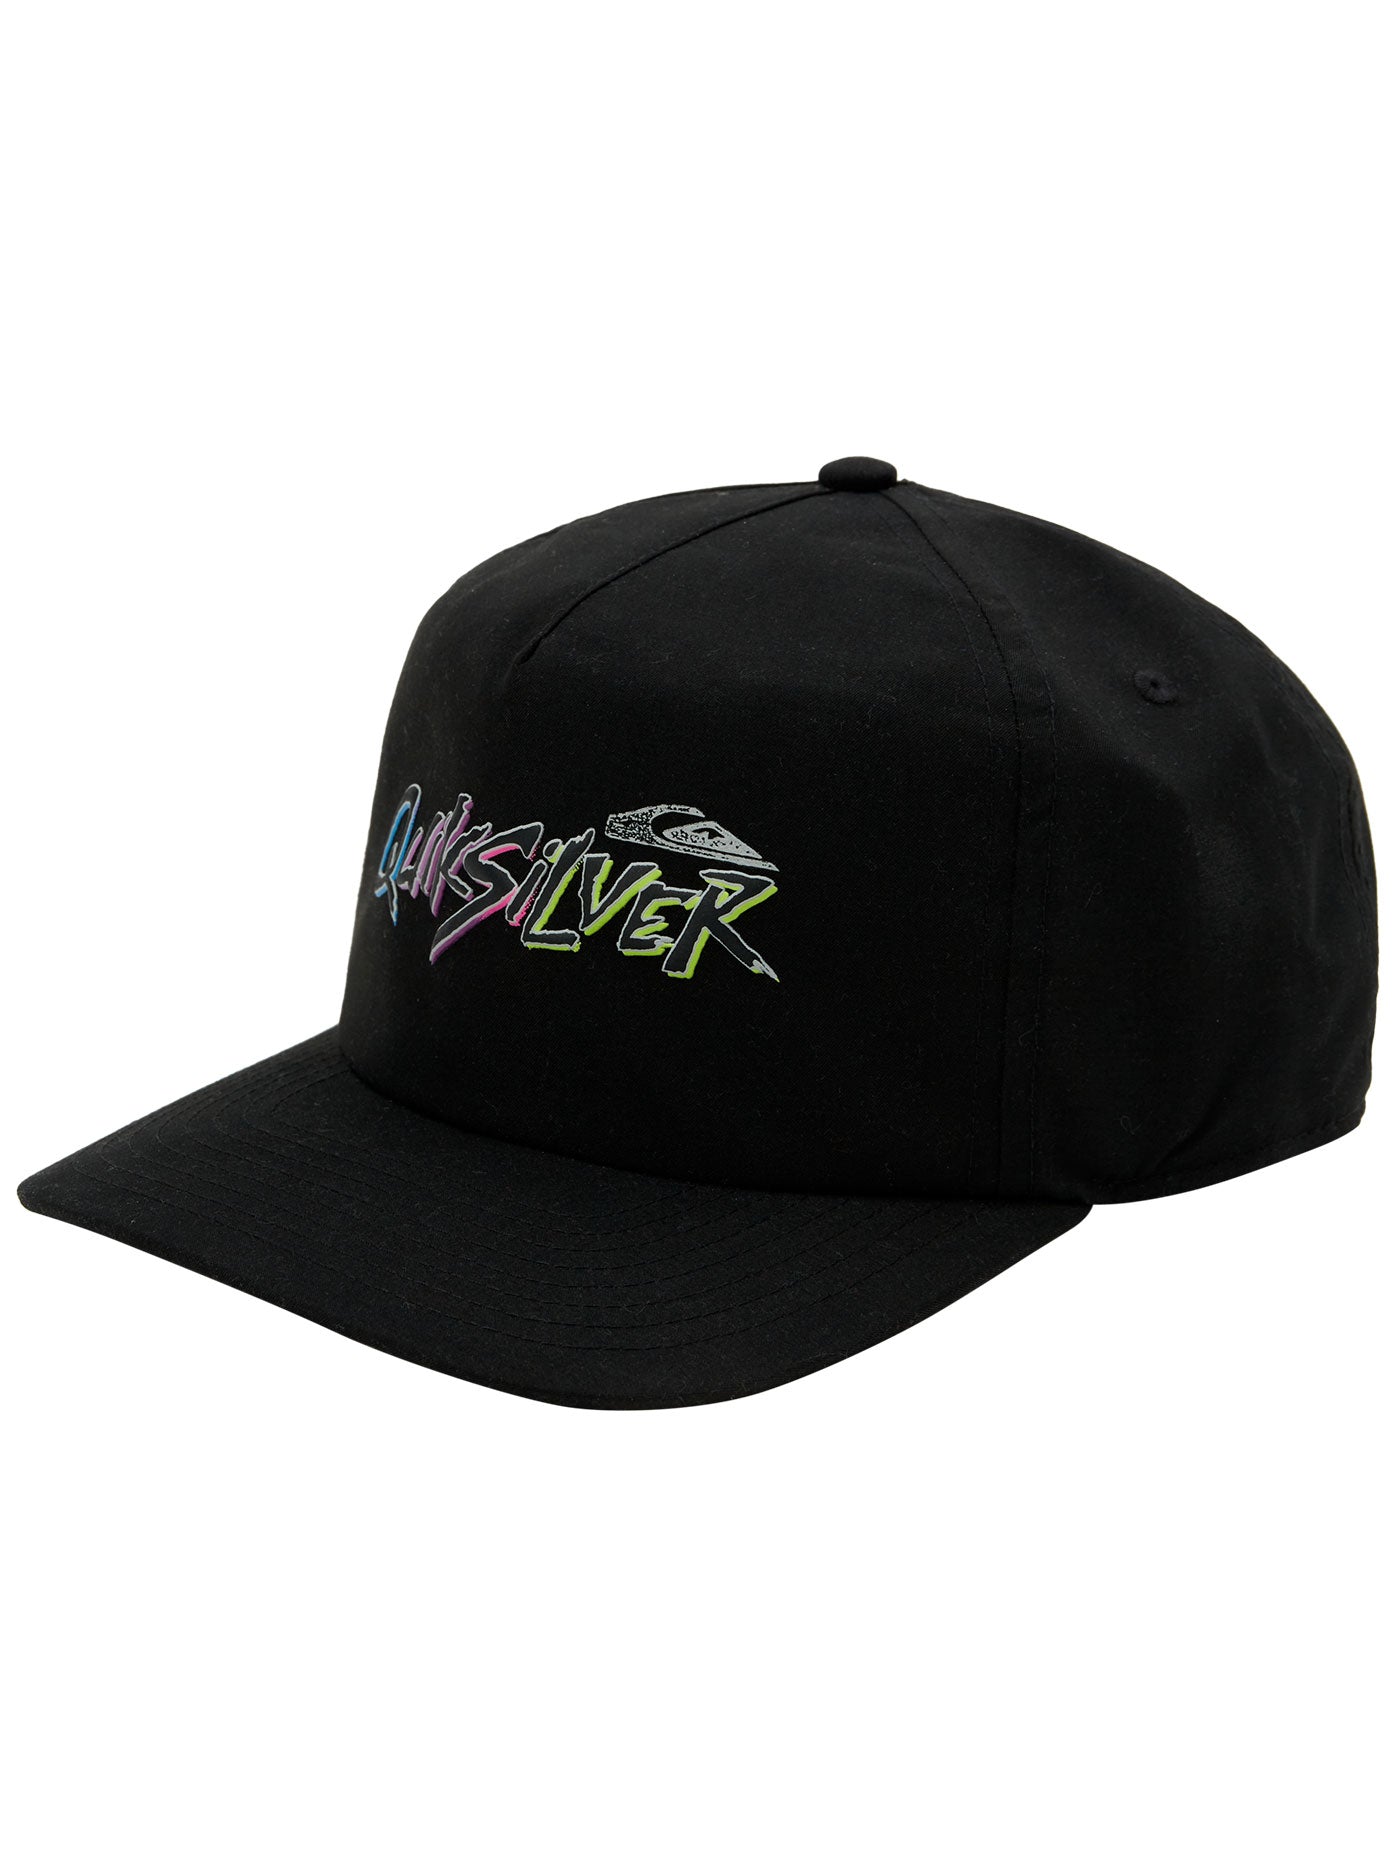 Quiksilver Branded Snapback Hat